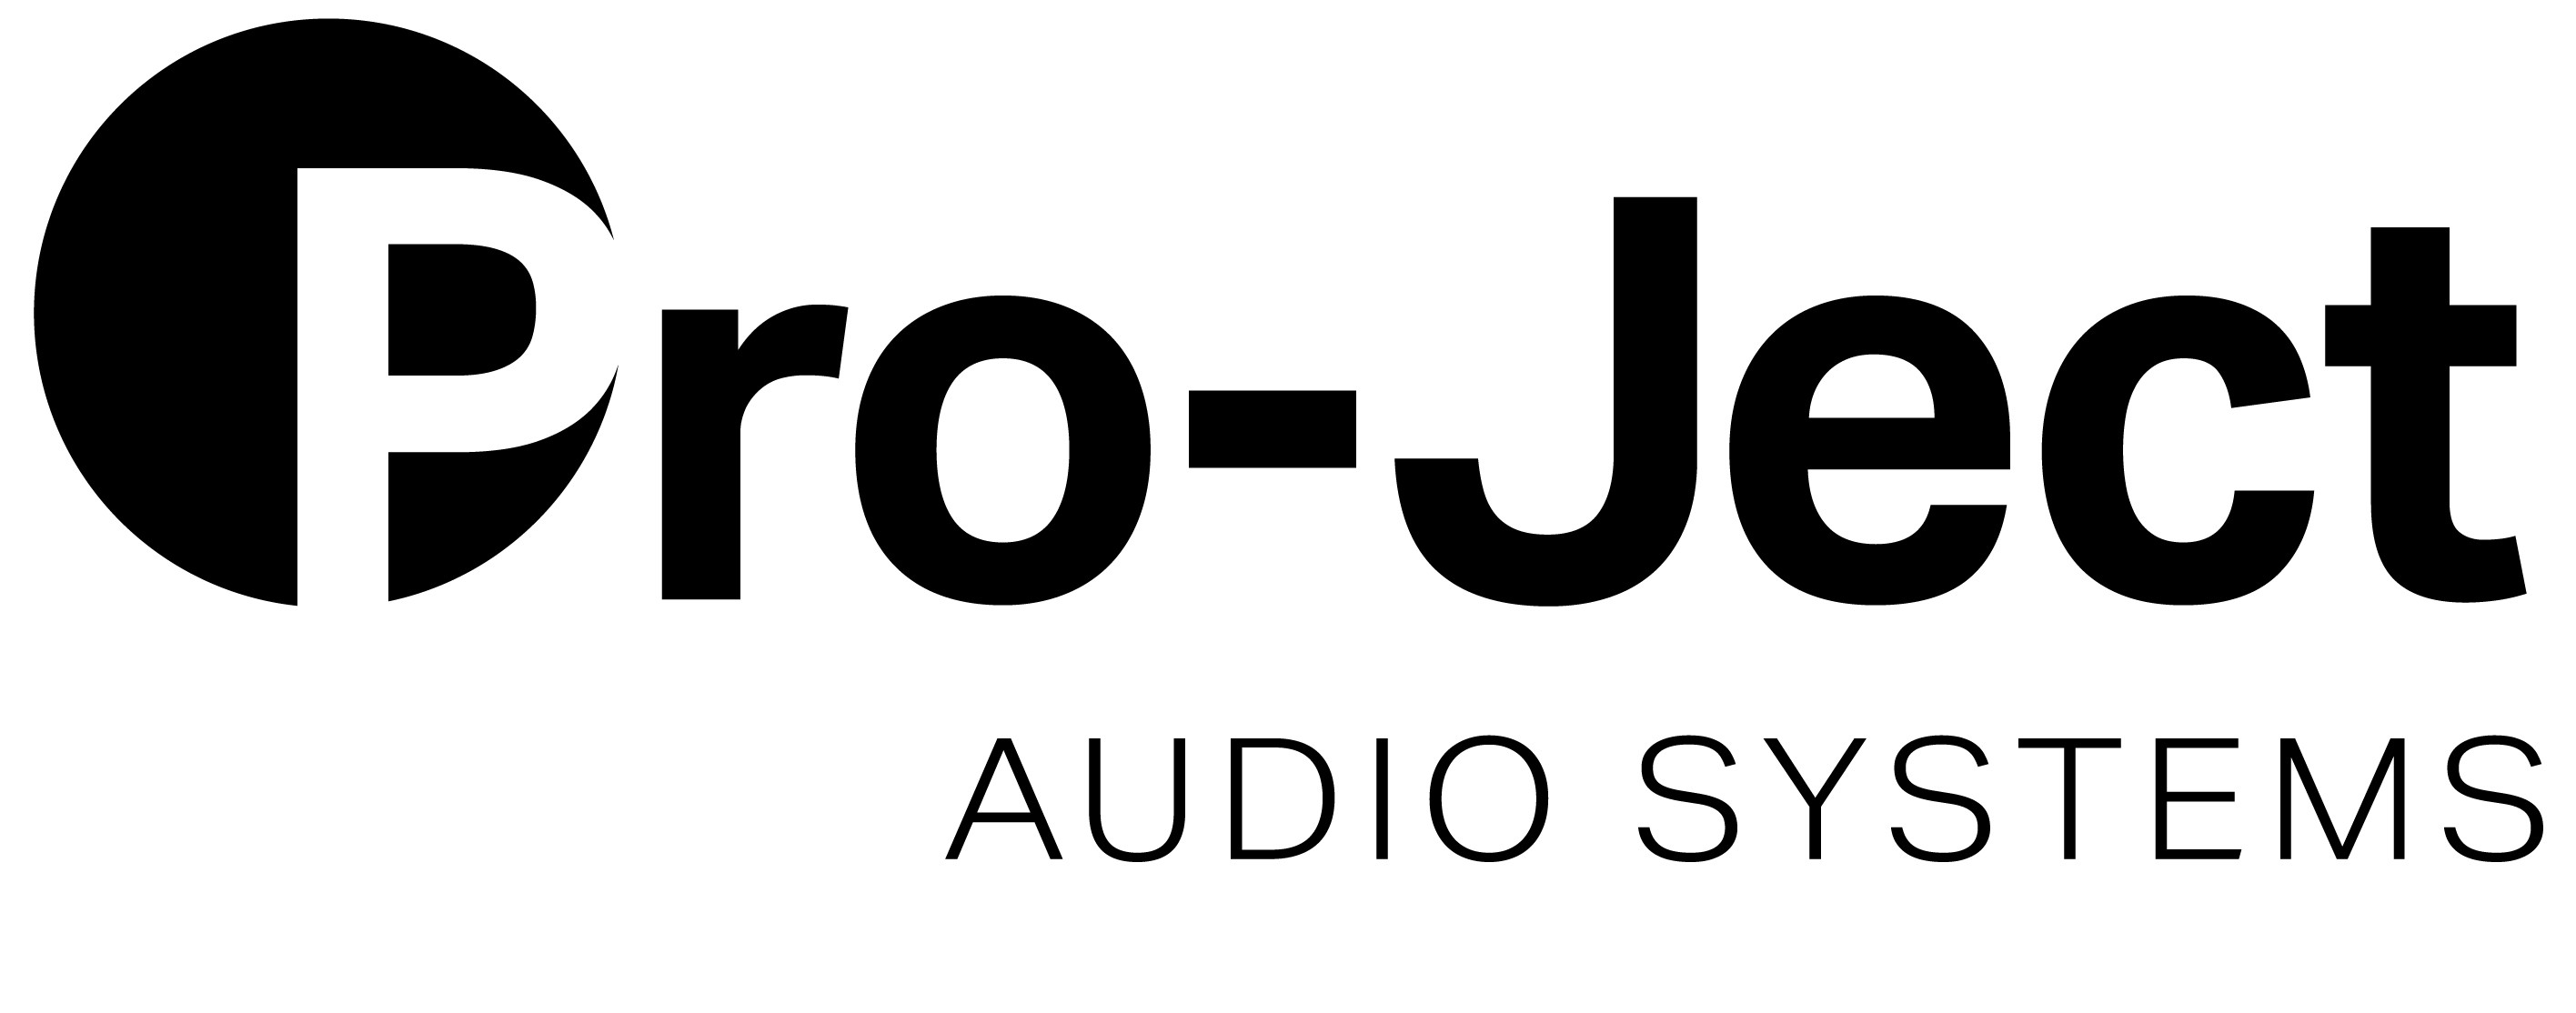 Pro-ject-audio